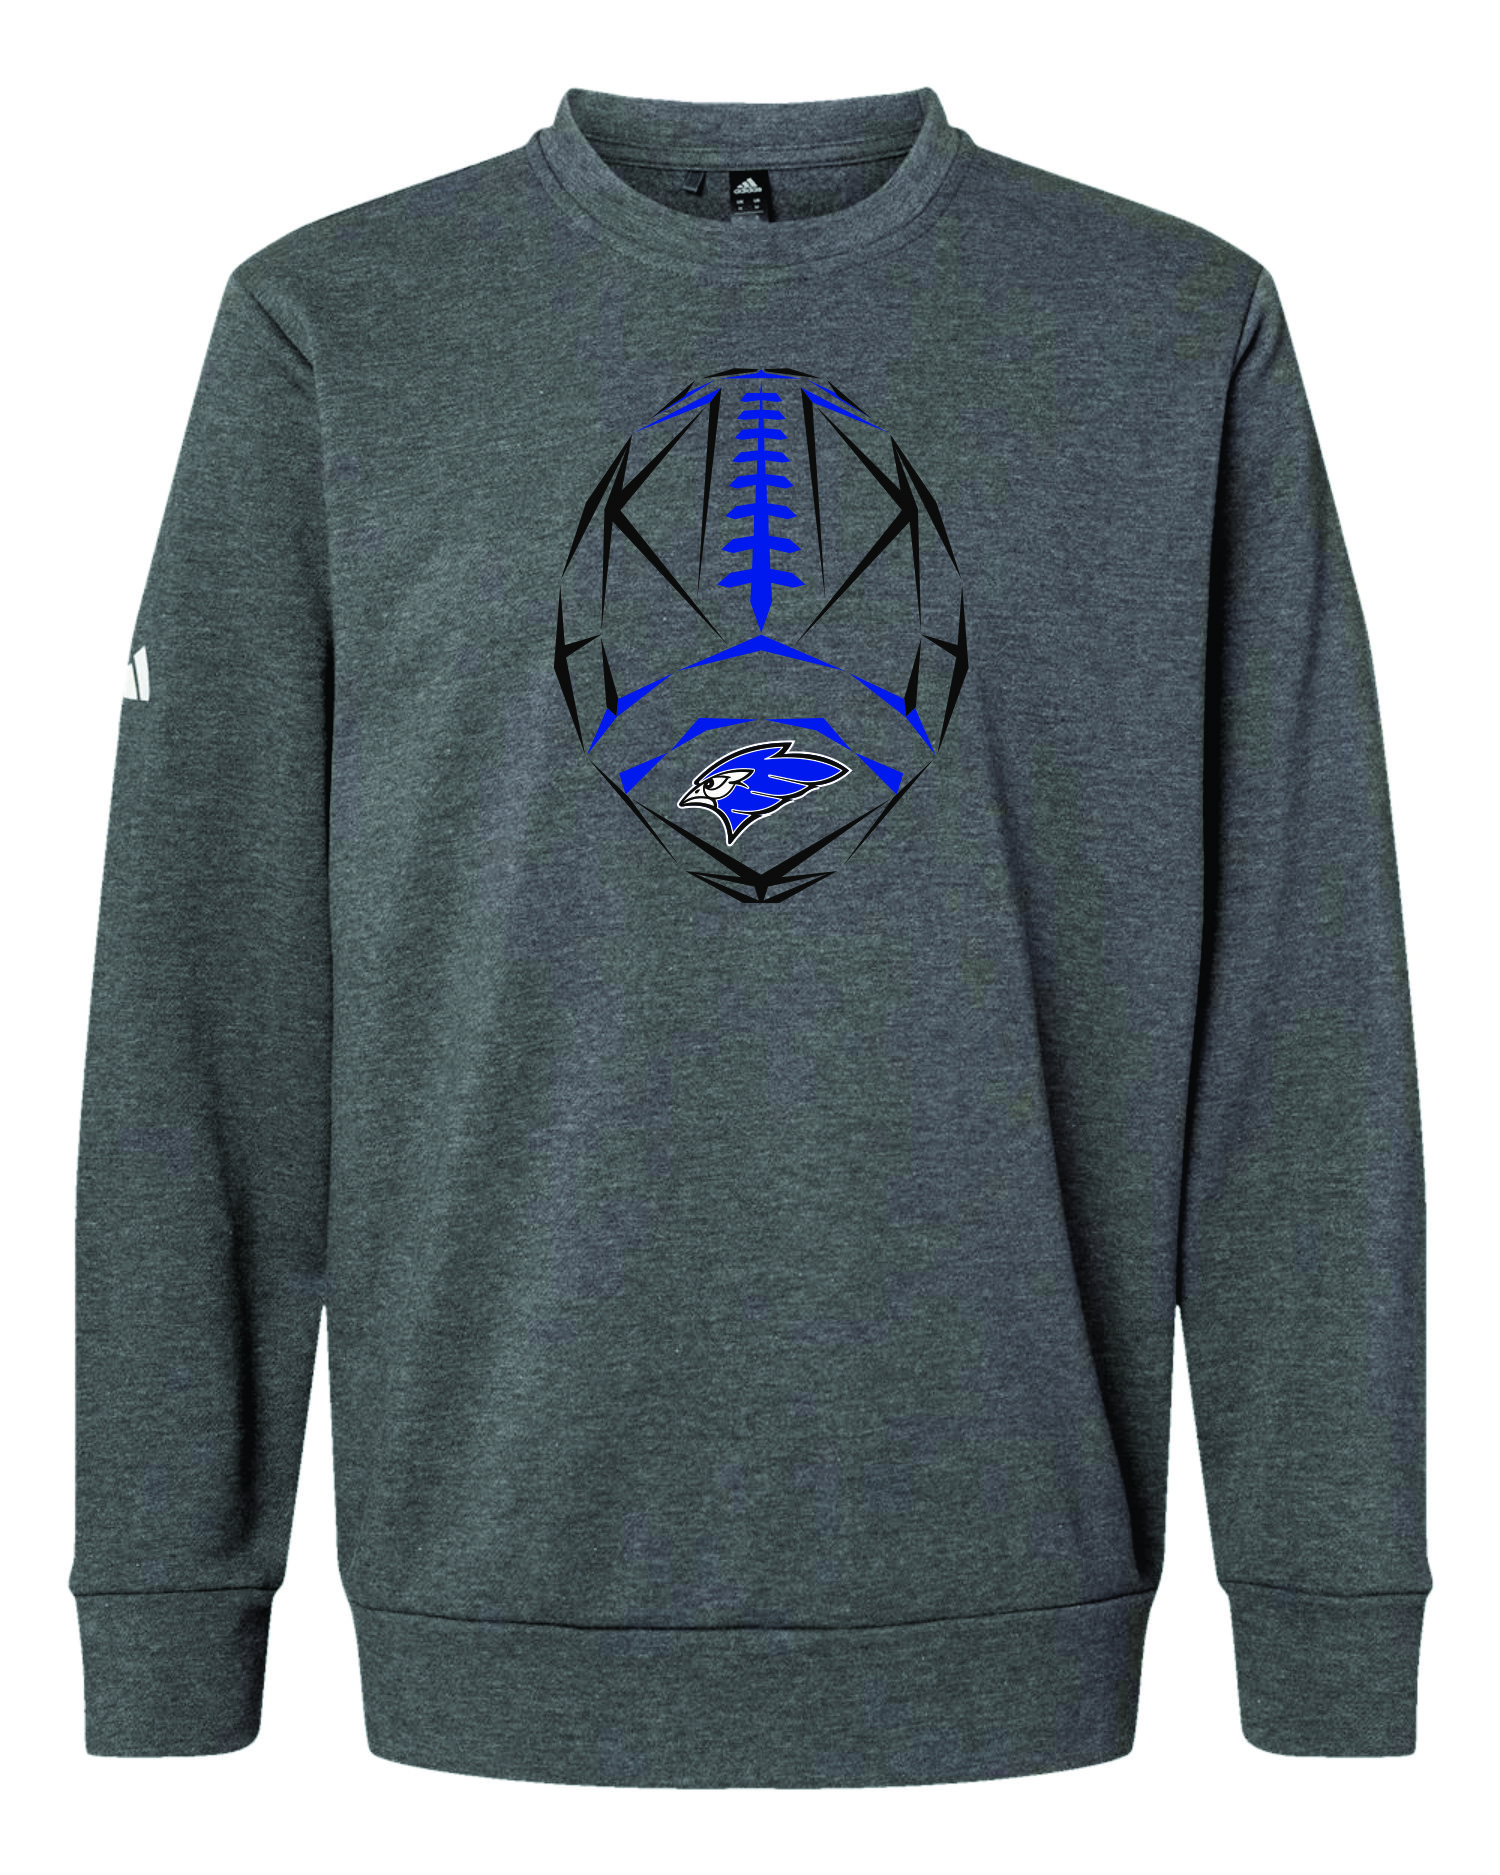 Benefit Football Adidas Orriginals A434 Crewneck Sweatshirt Colby Blue Fleece Jay - Unisex (Dark Grey)